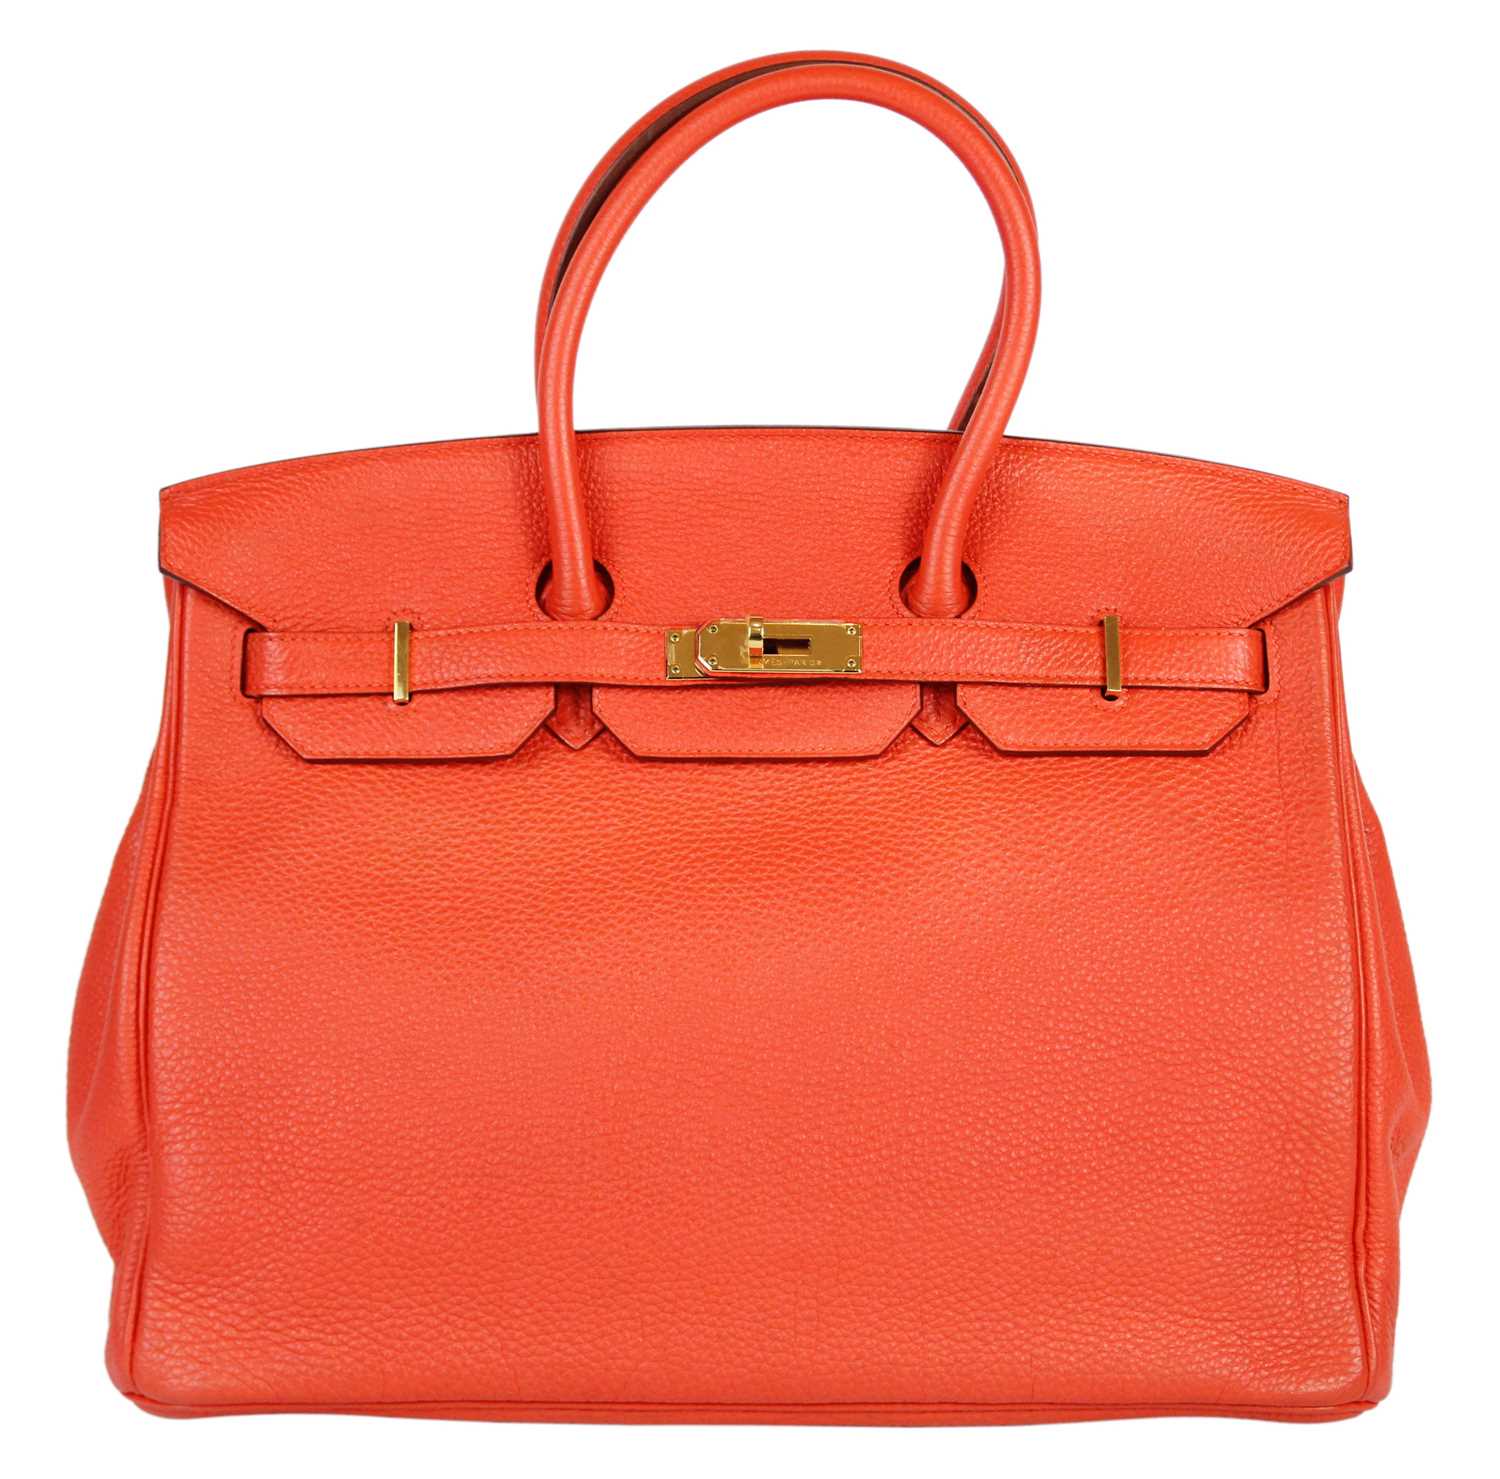 Lot 456 - Hermès Birkin - A Hermès Birkin 35 rouge togo leather handbag, circa 2013.